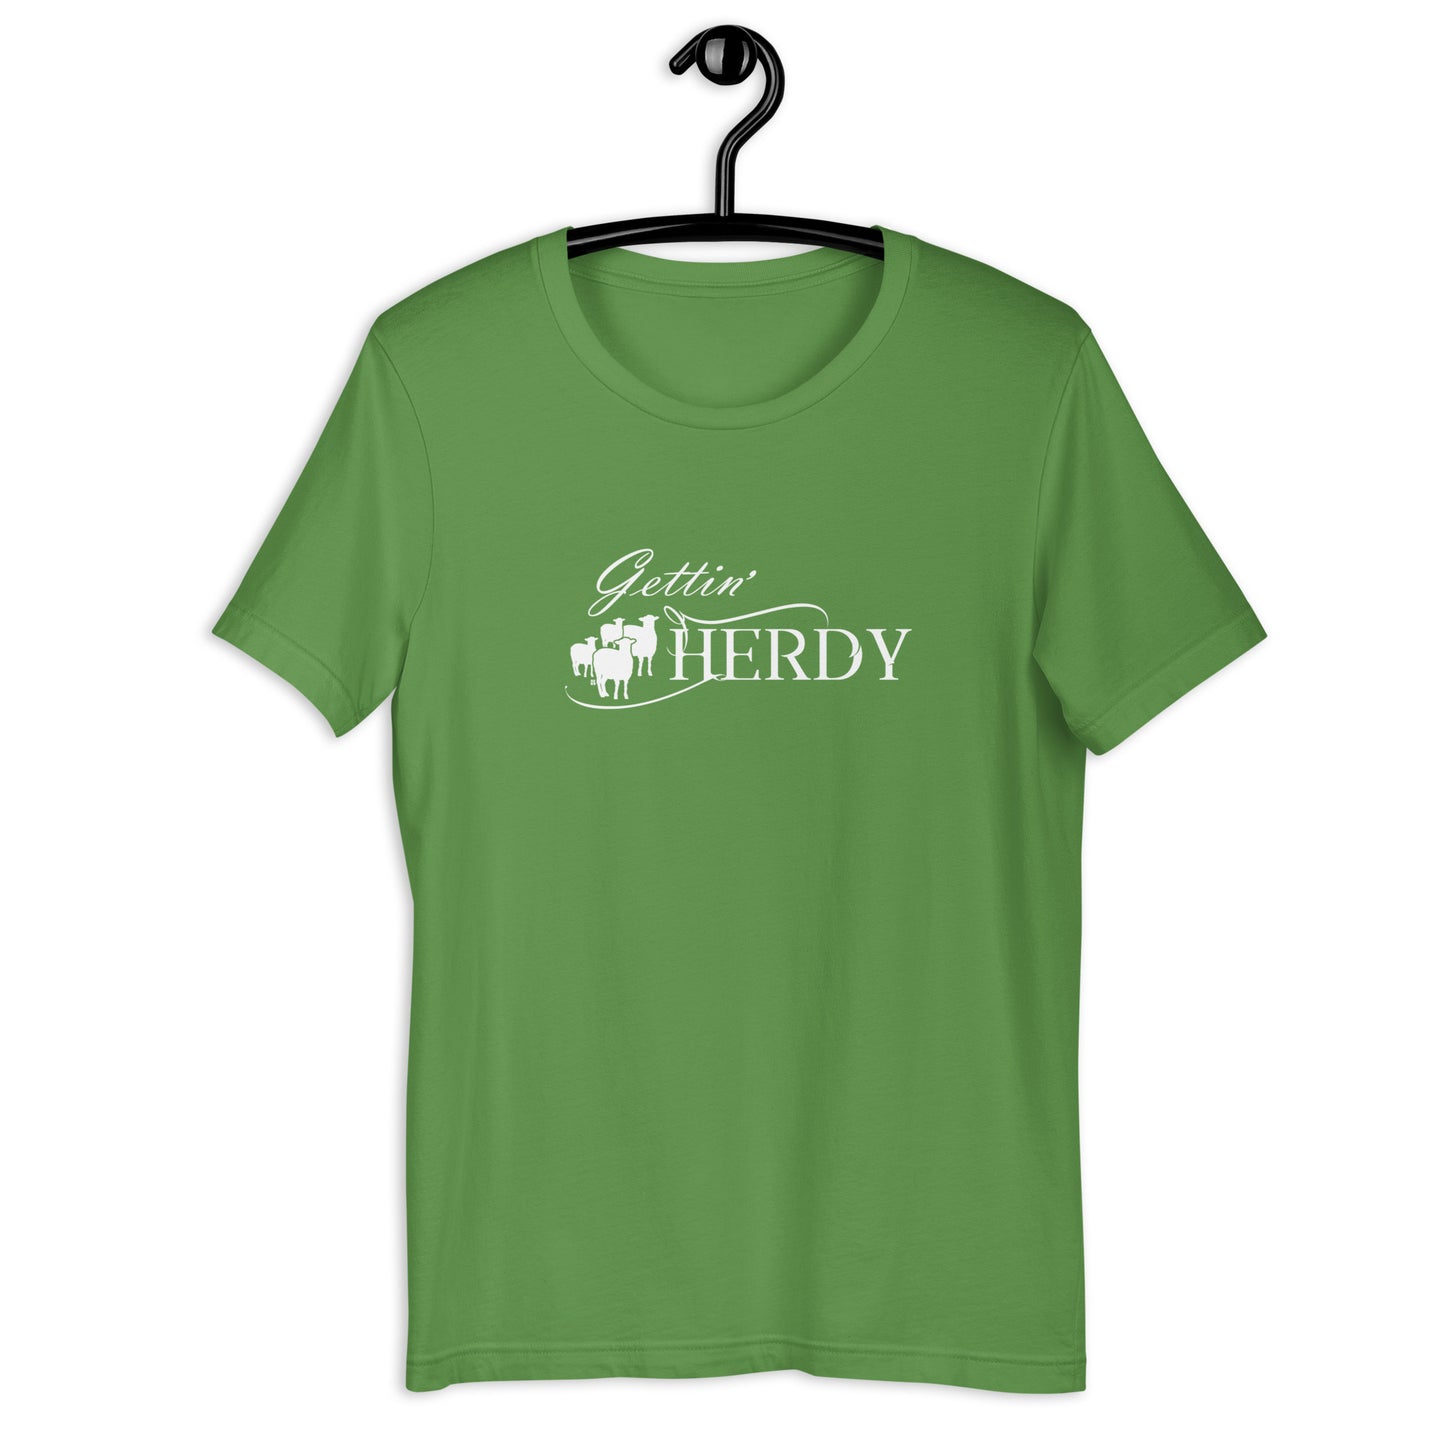 GETTING HERDY - Unisex t-shirt